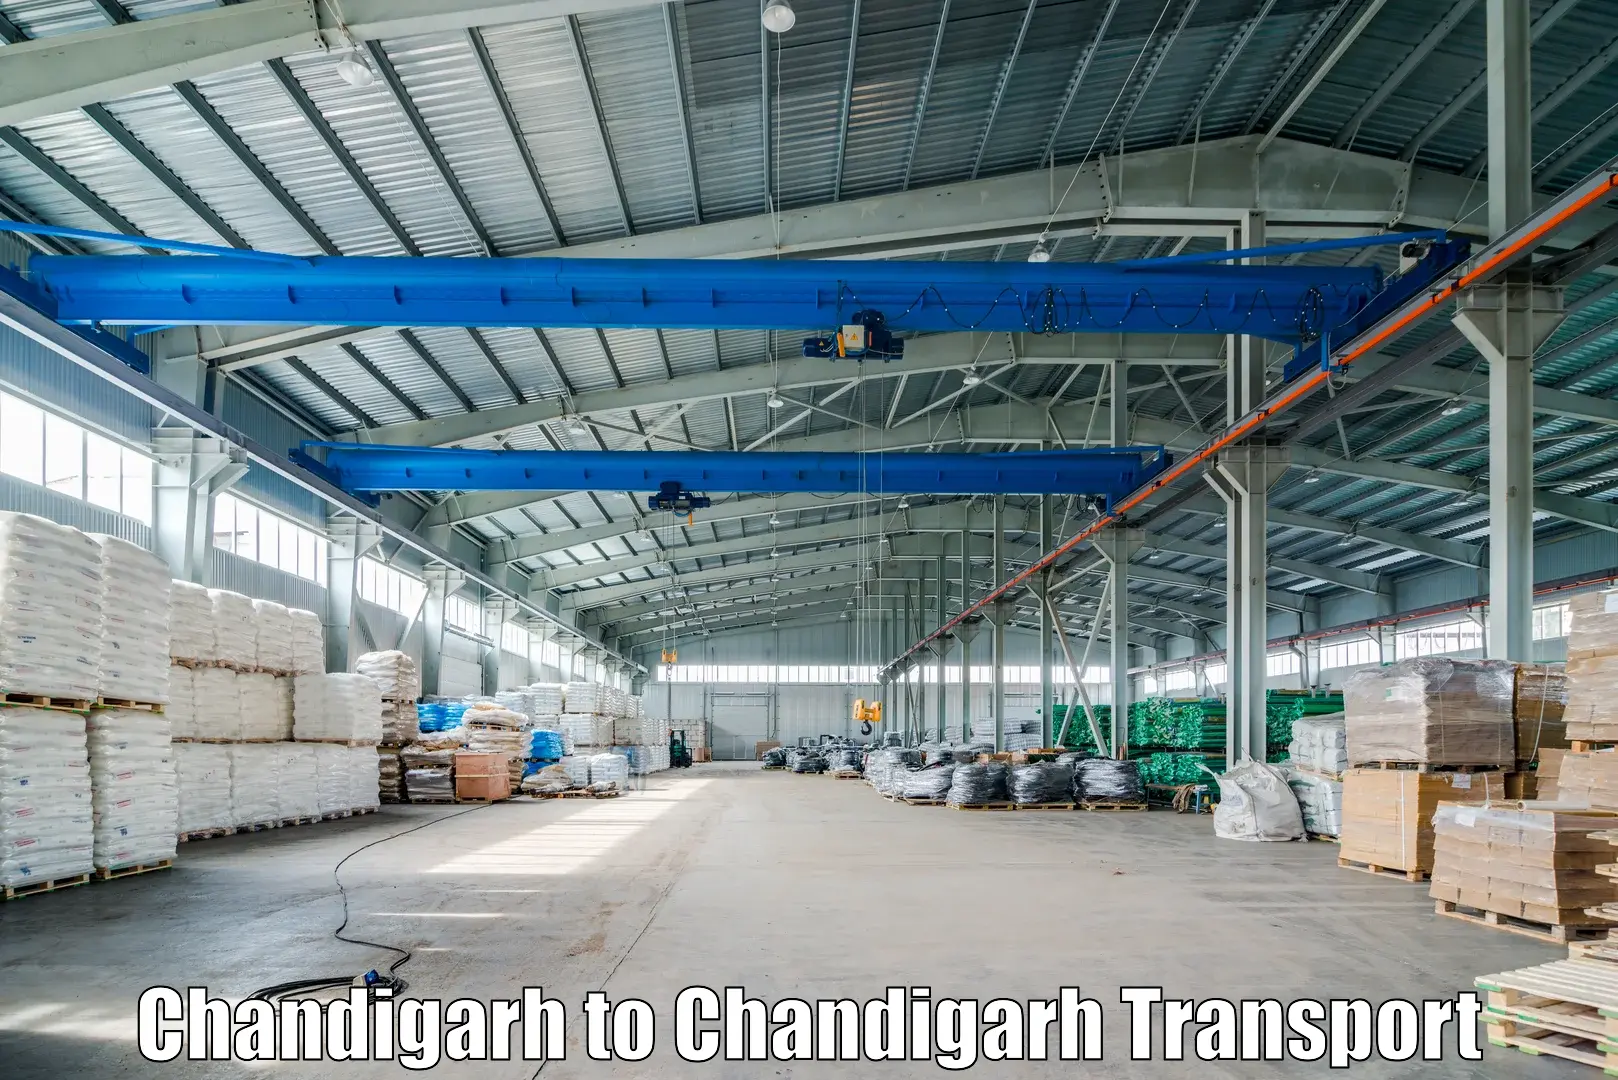 Transport in sharing Chandigarh to Chandigarh